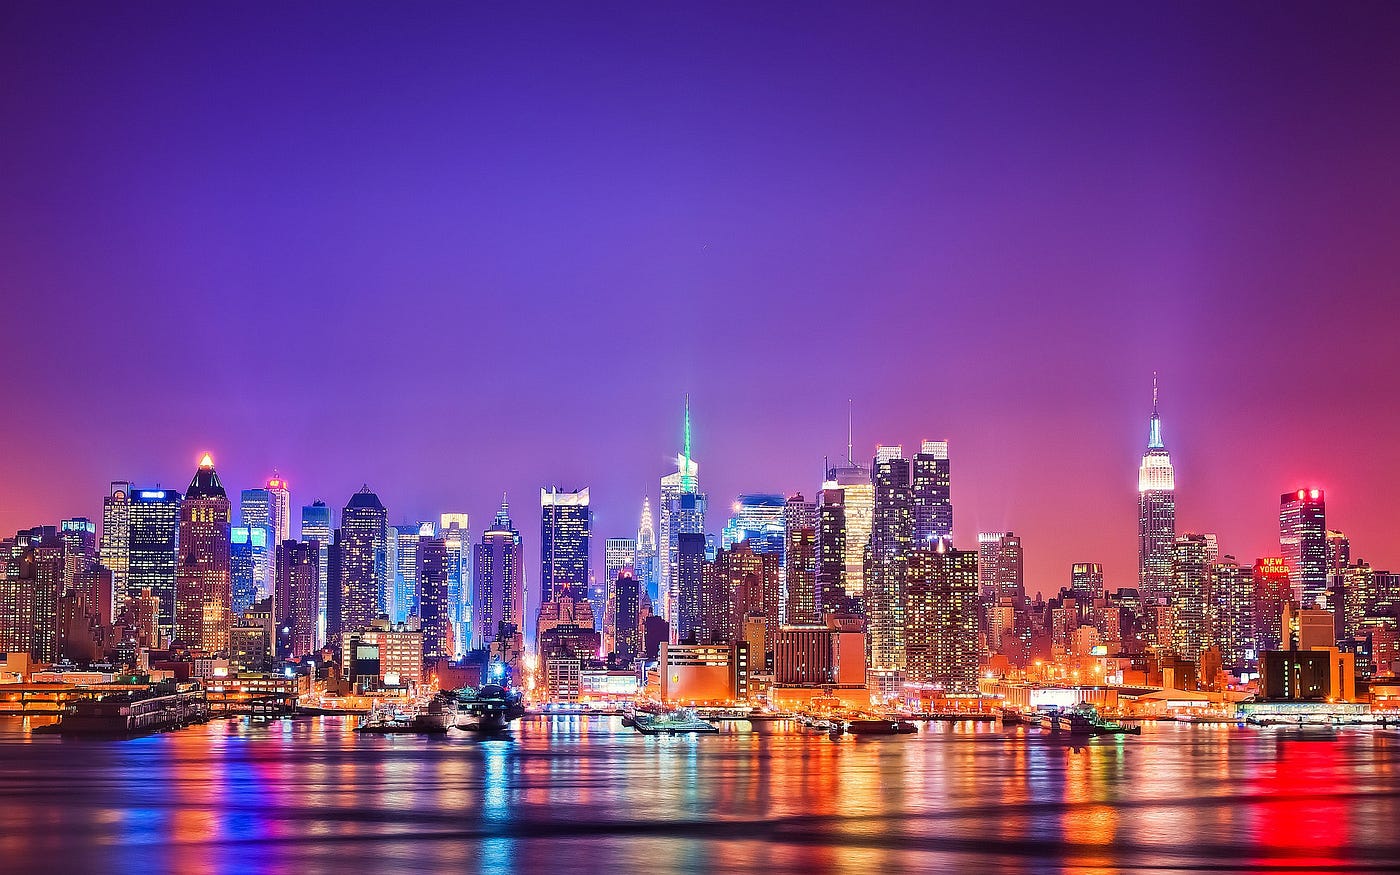 New York: The City That Never Sleeps, by Hannah Lynn